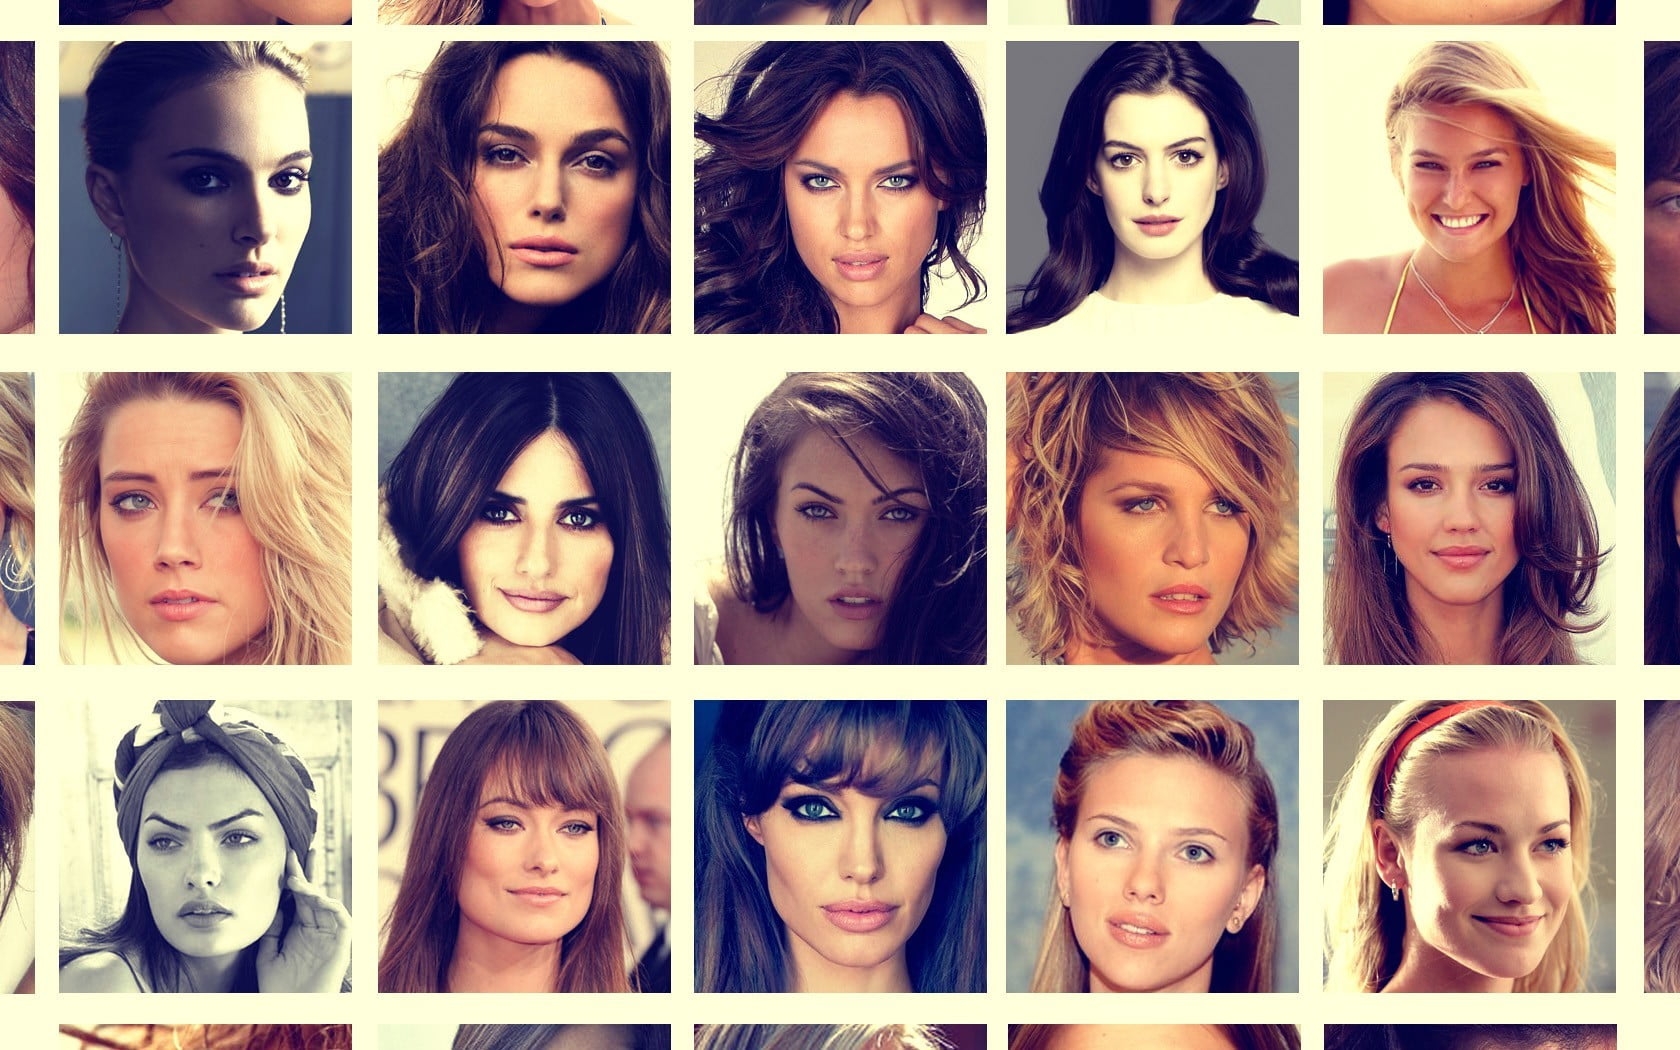 women's photo collage screenshot